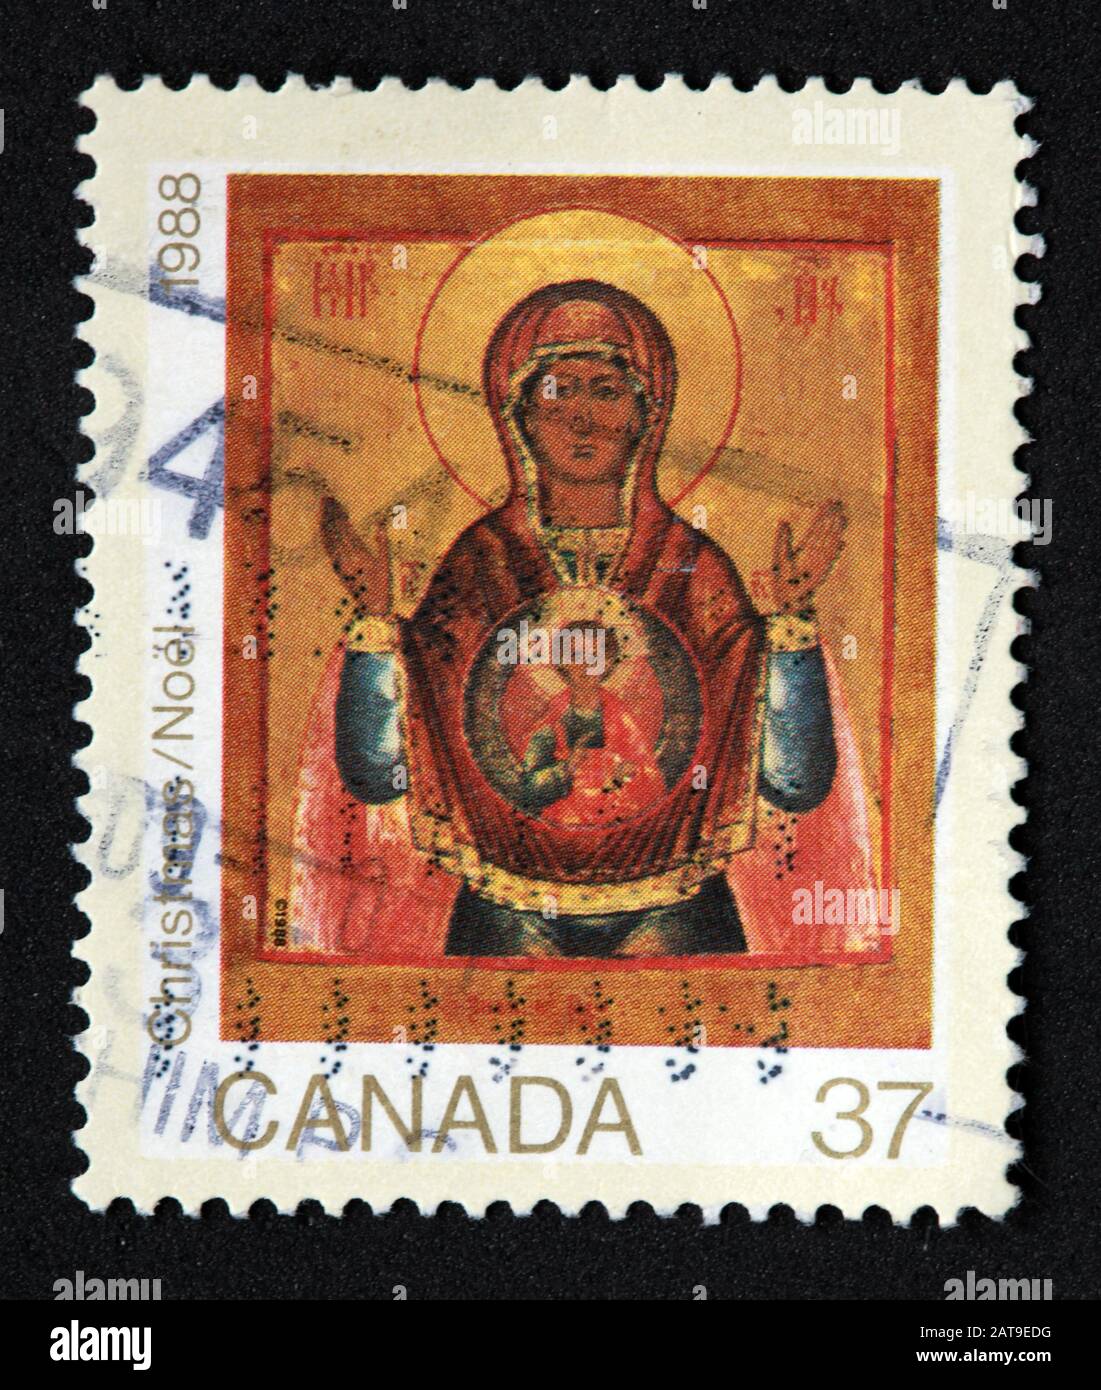 Kanadische Briefmarke, Canada Stamp, Canada Post, used Stamp, Canada 37c Christmas, Xmas, 1988, Angel, Christ, Stamp Stockfoto